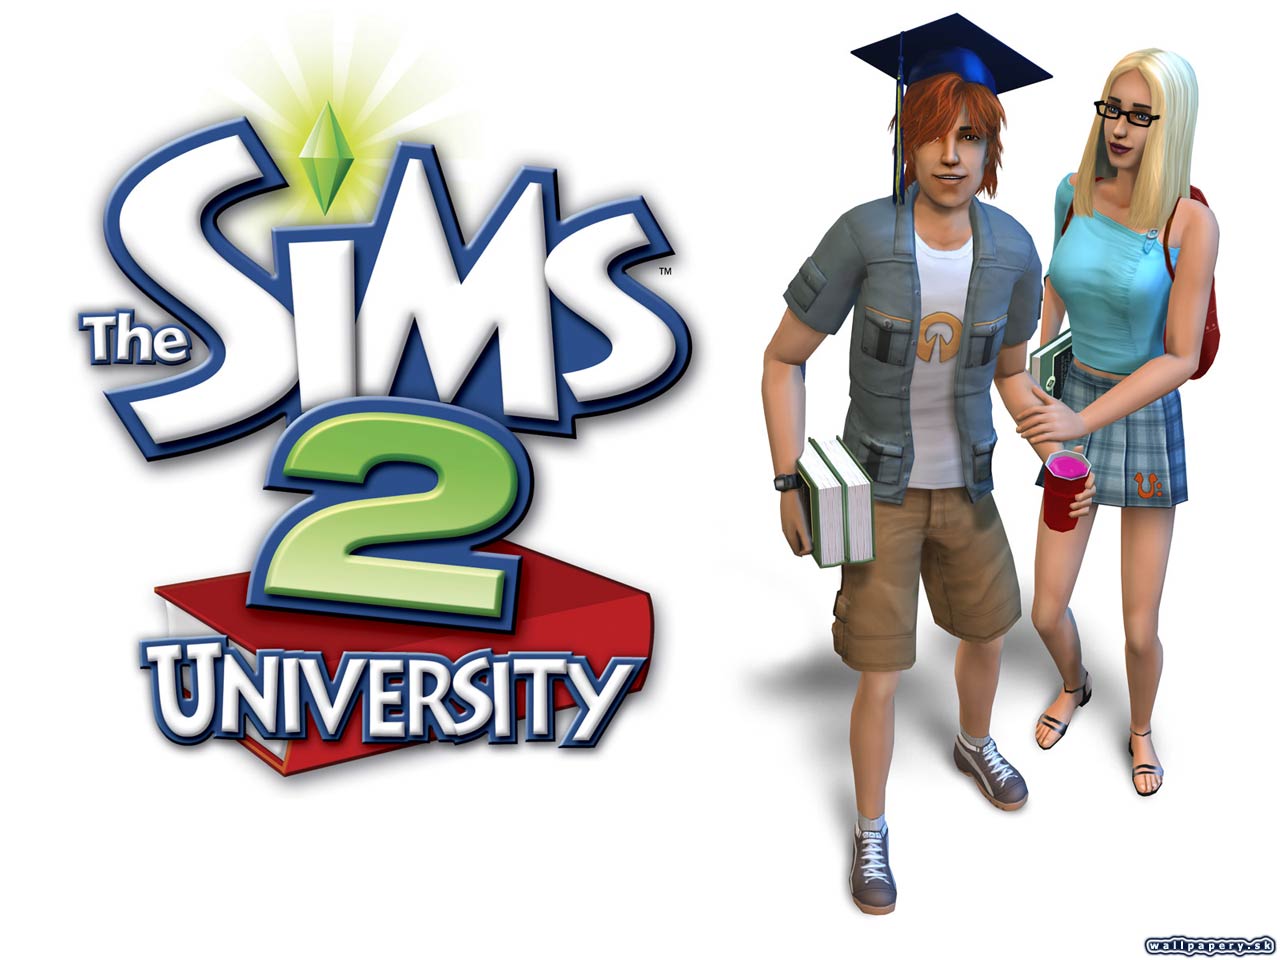 Sims university. The SIMS 2: университет. The SIMS 2 2004. Симс 2 университет. The SIMS 2 русская версия.